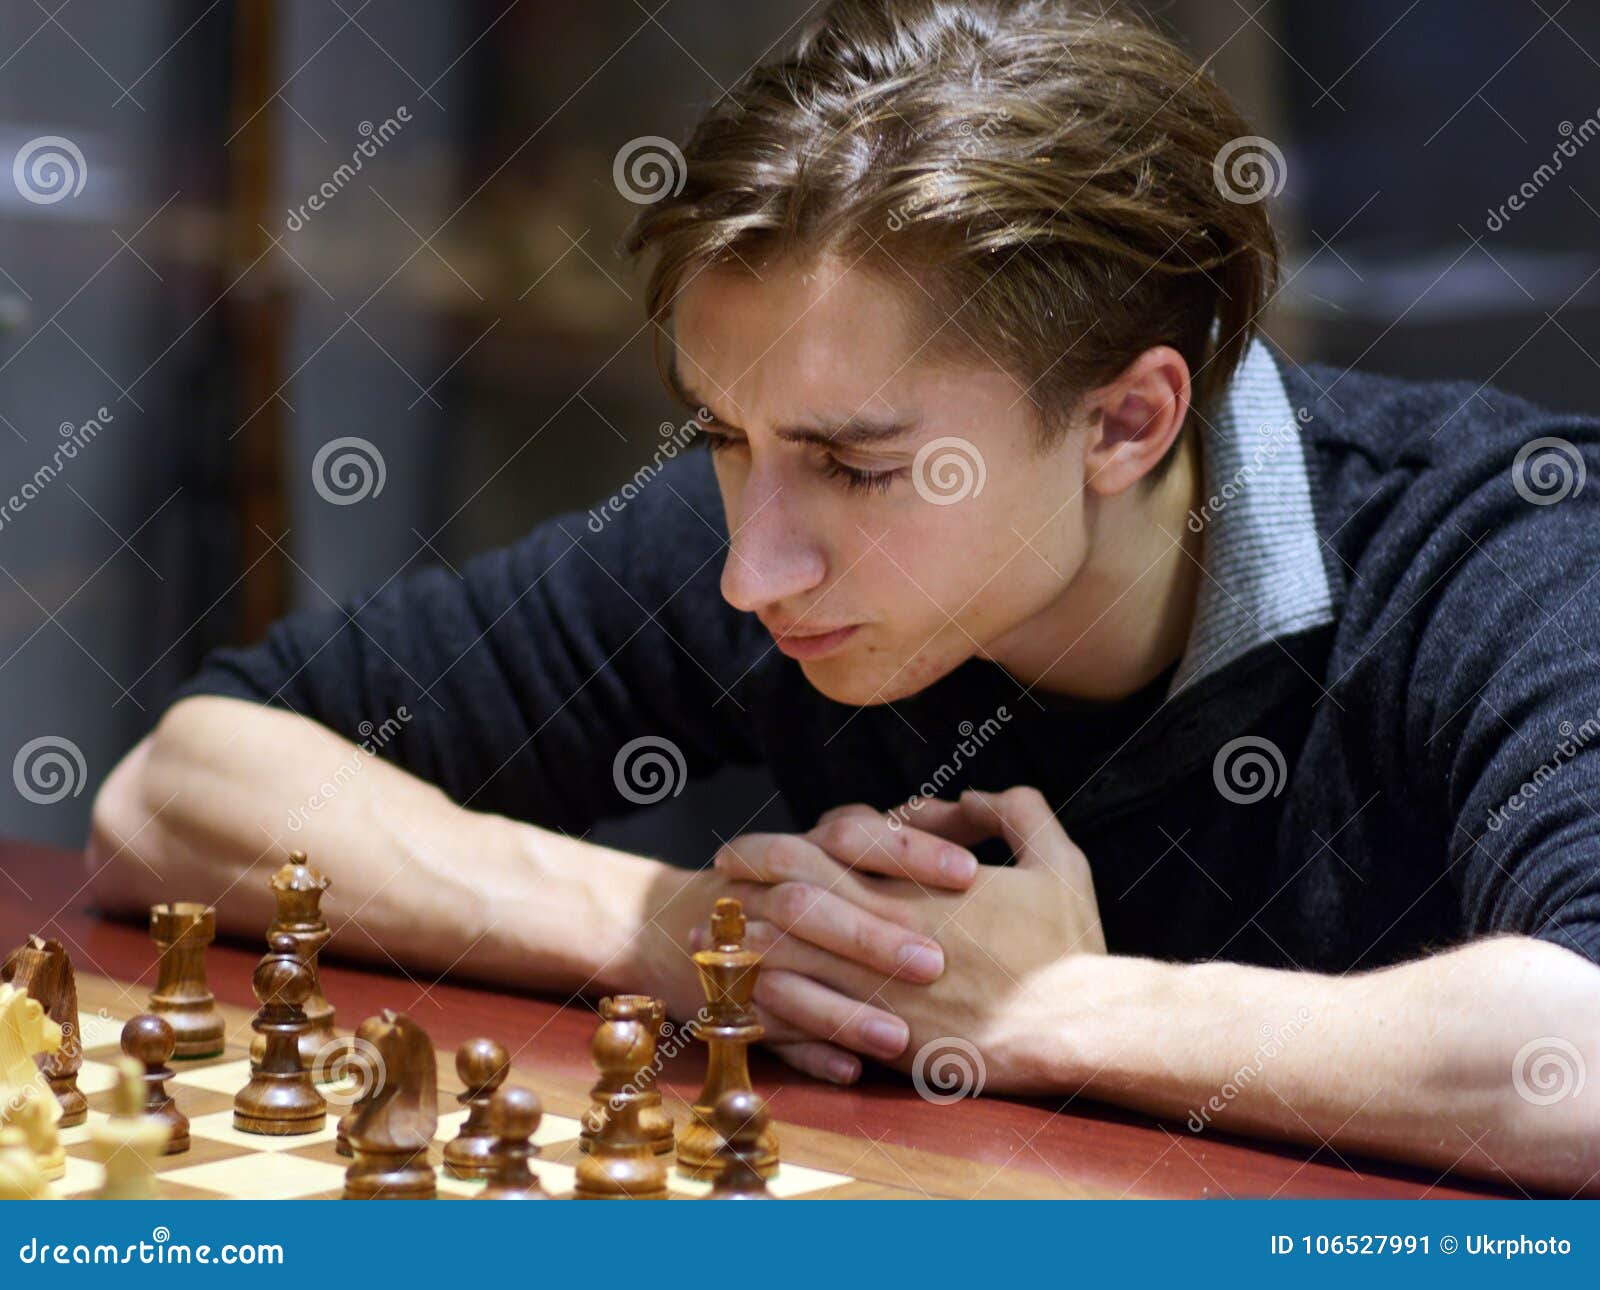 chess24 - Daniil Dubov plays the stunning 19.Qxg6!! and